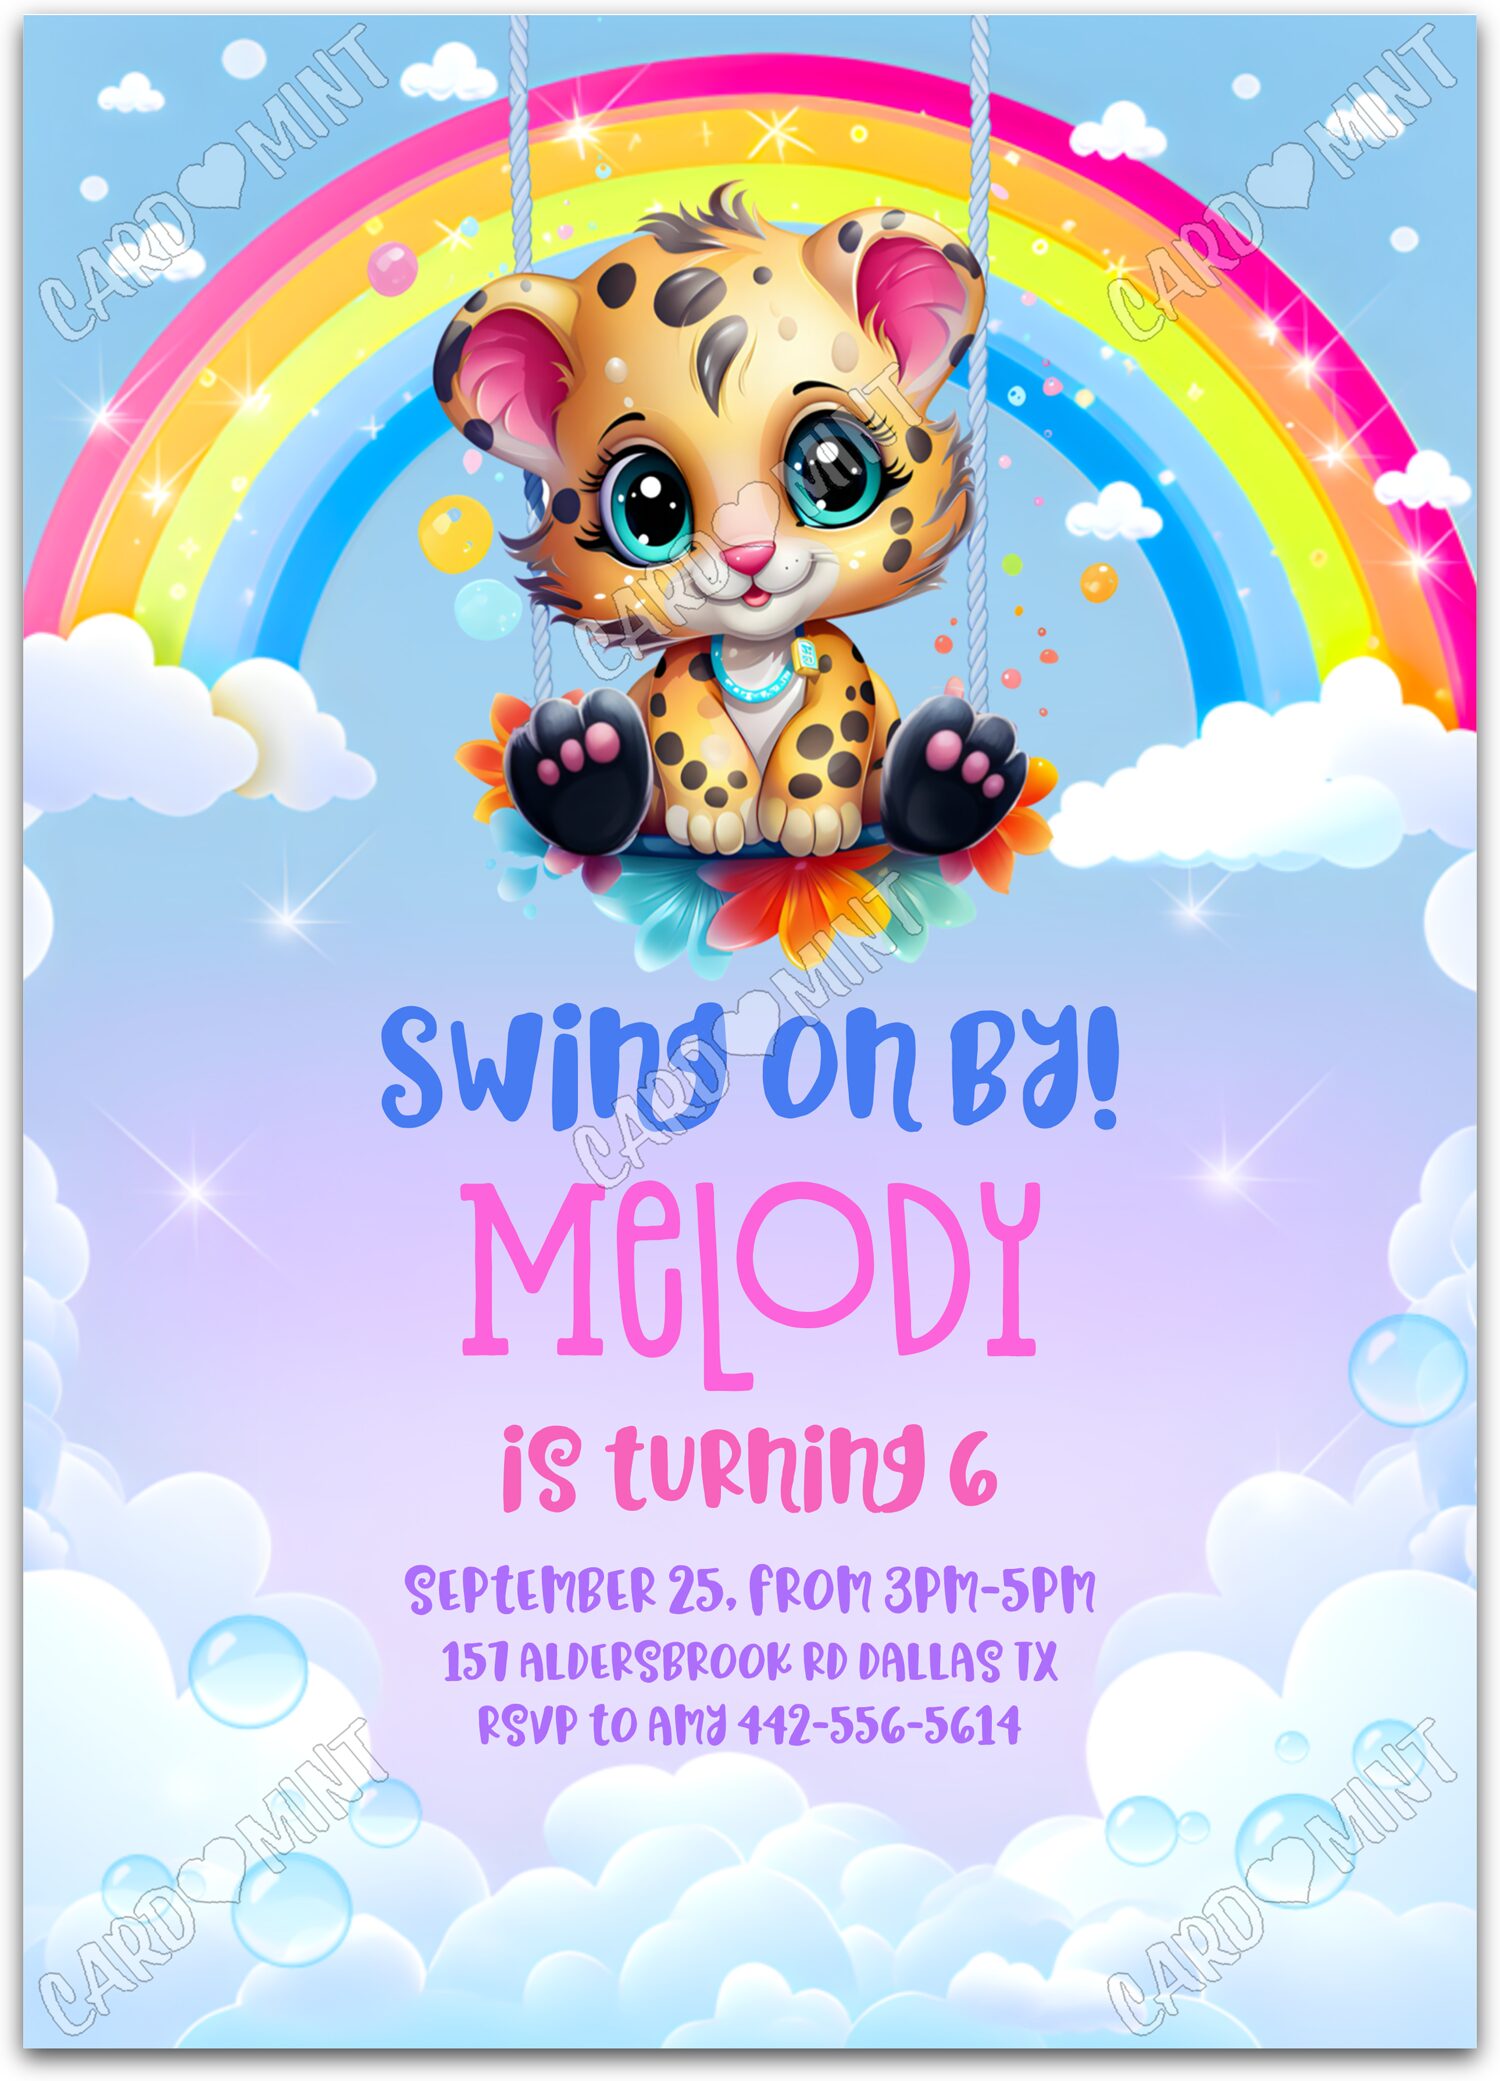 Editable Swing on By rainbow kitten on swing girl Birthday Party 5"x7" Invitation EV1102